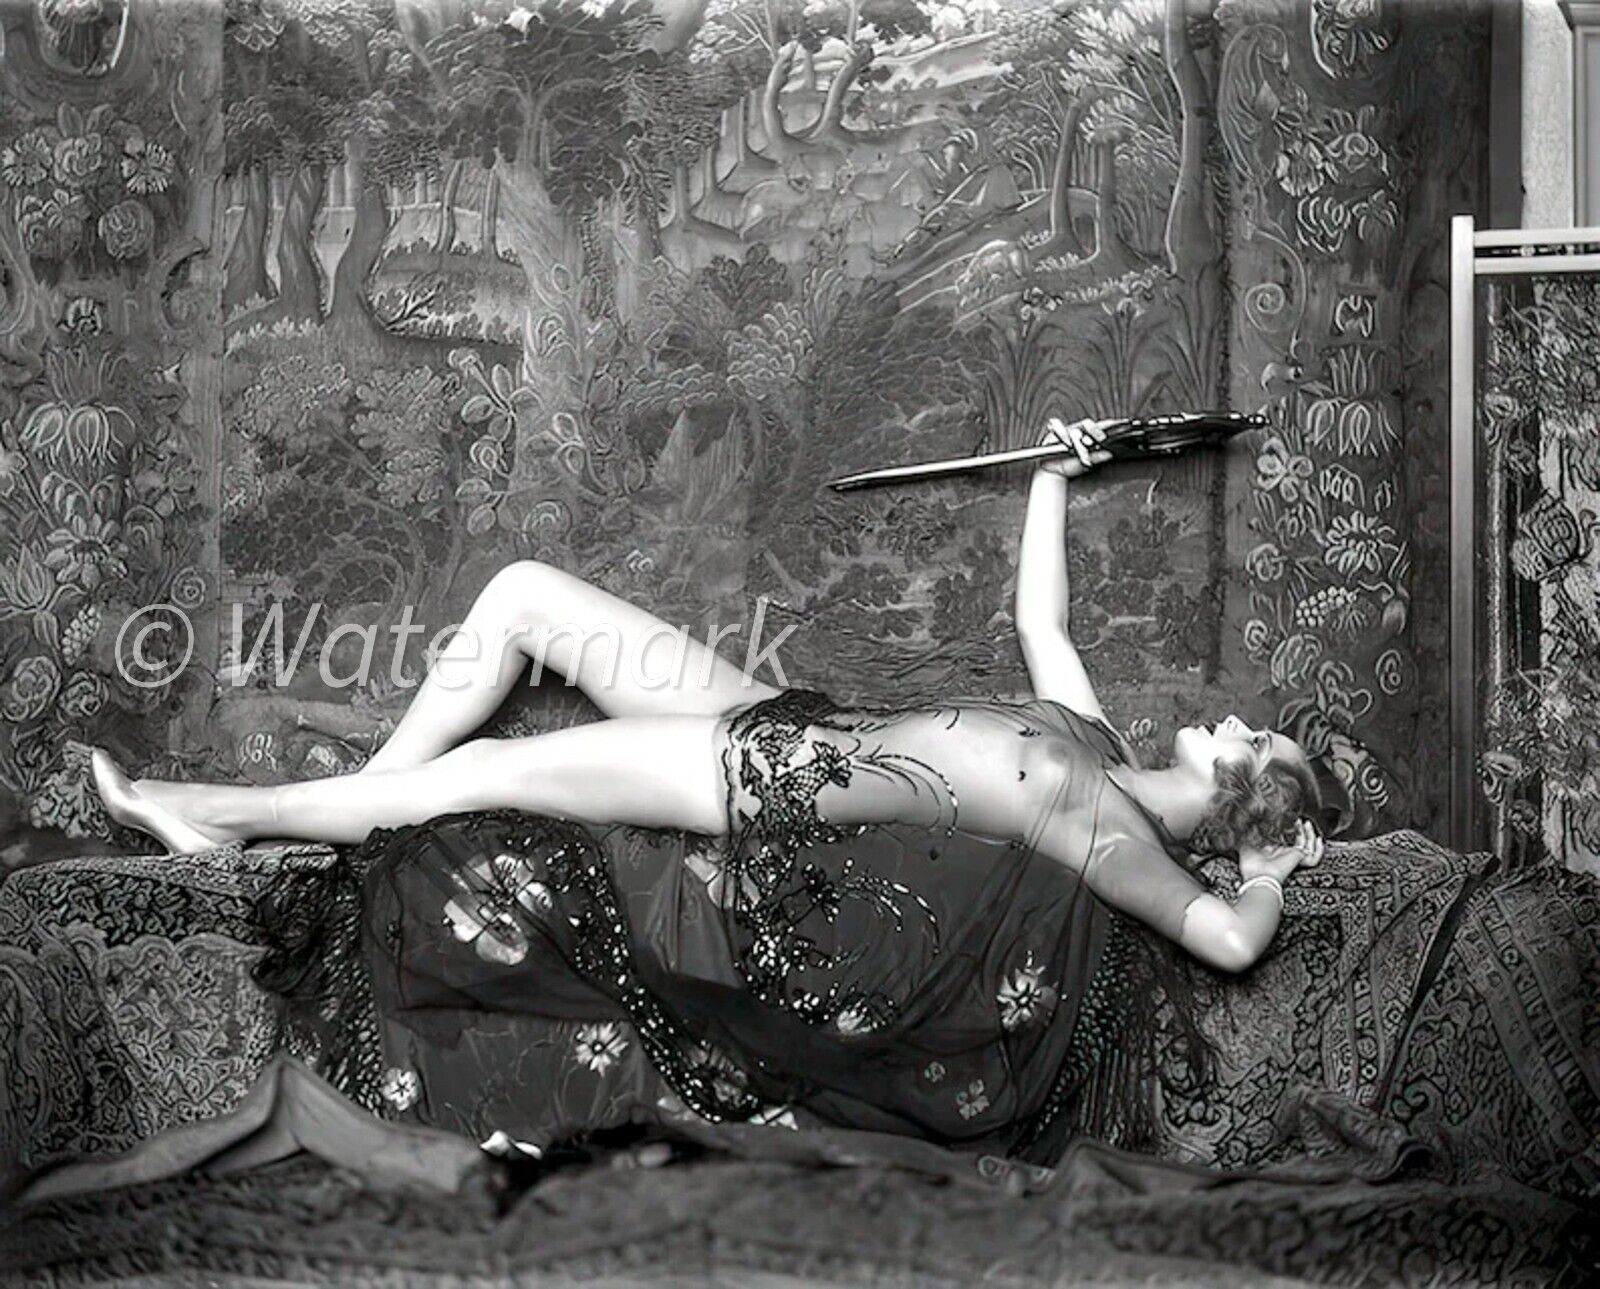 8x10 PUBLICITY PHOTO 1910s - 1920s Ziegfeld Follies dancer Girl Vintage